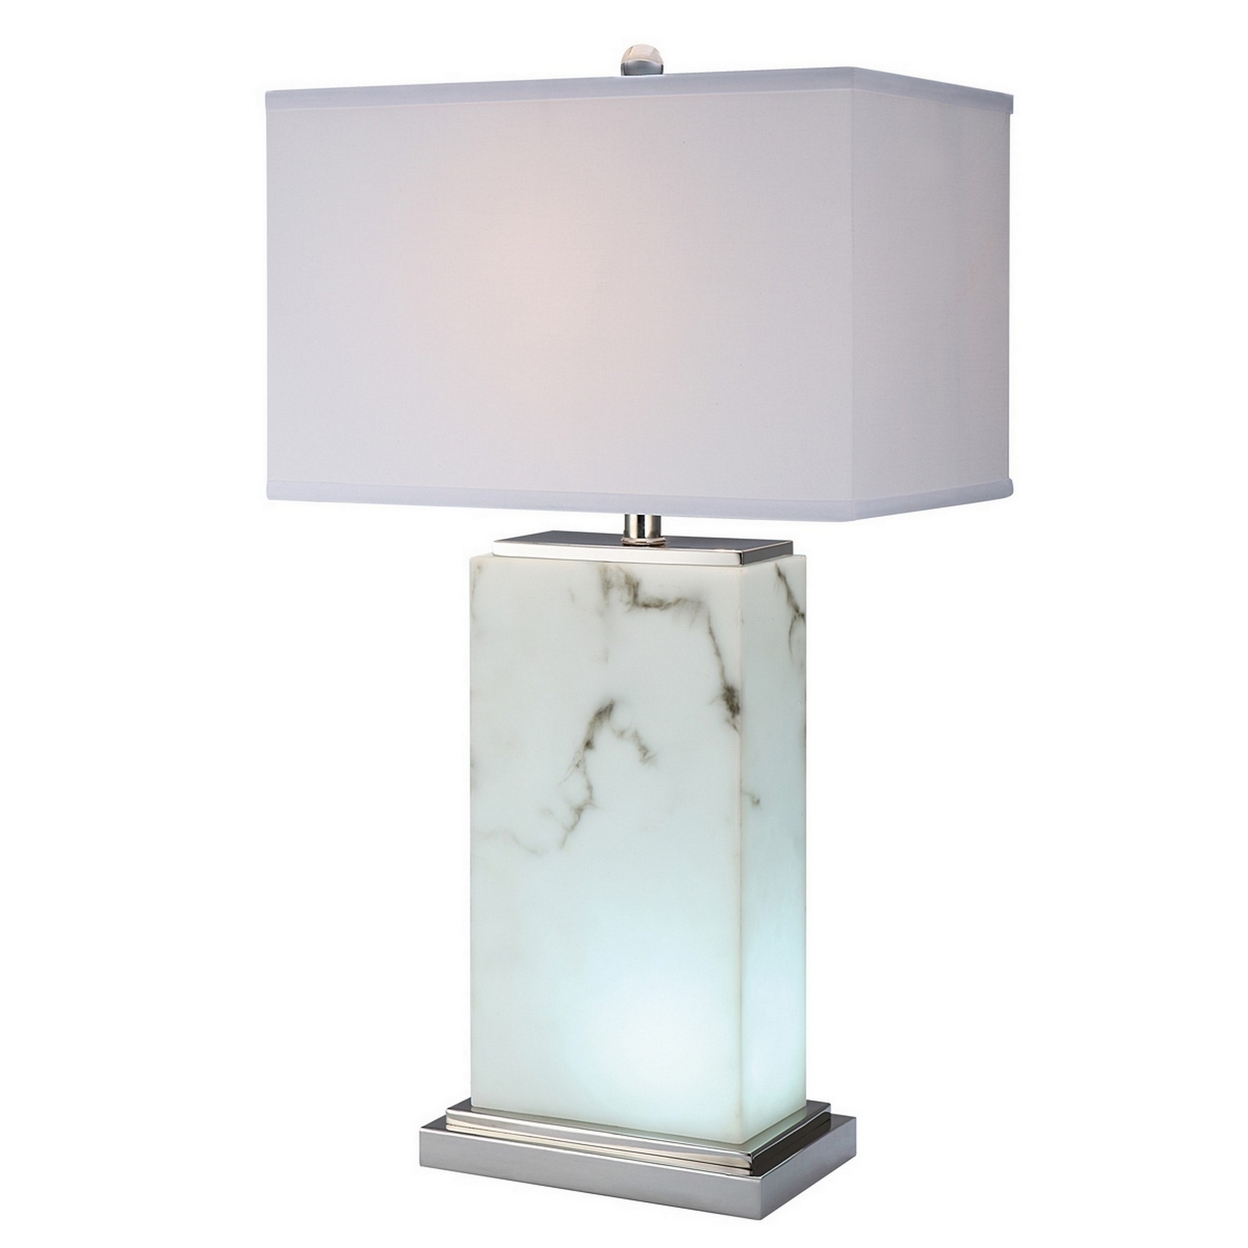 29 Inch Table Lamp, White Marble Stand, Rectangular Shade, Metal Base -Saltoro Sherpi